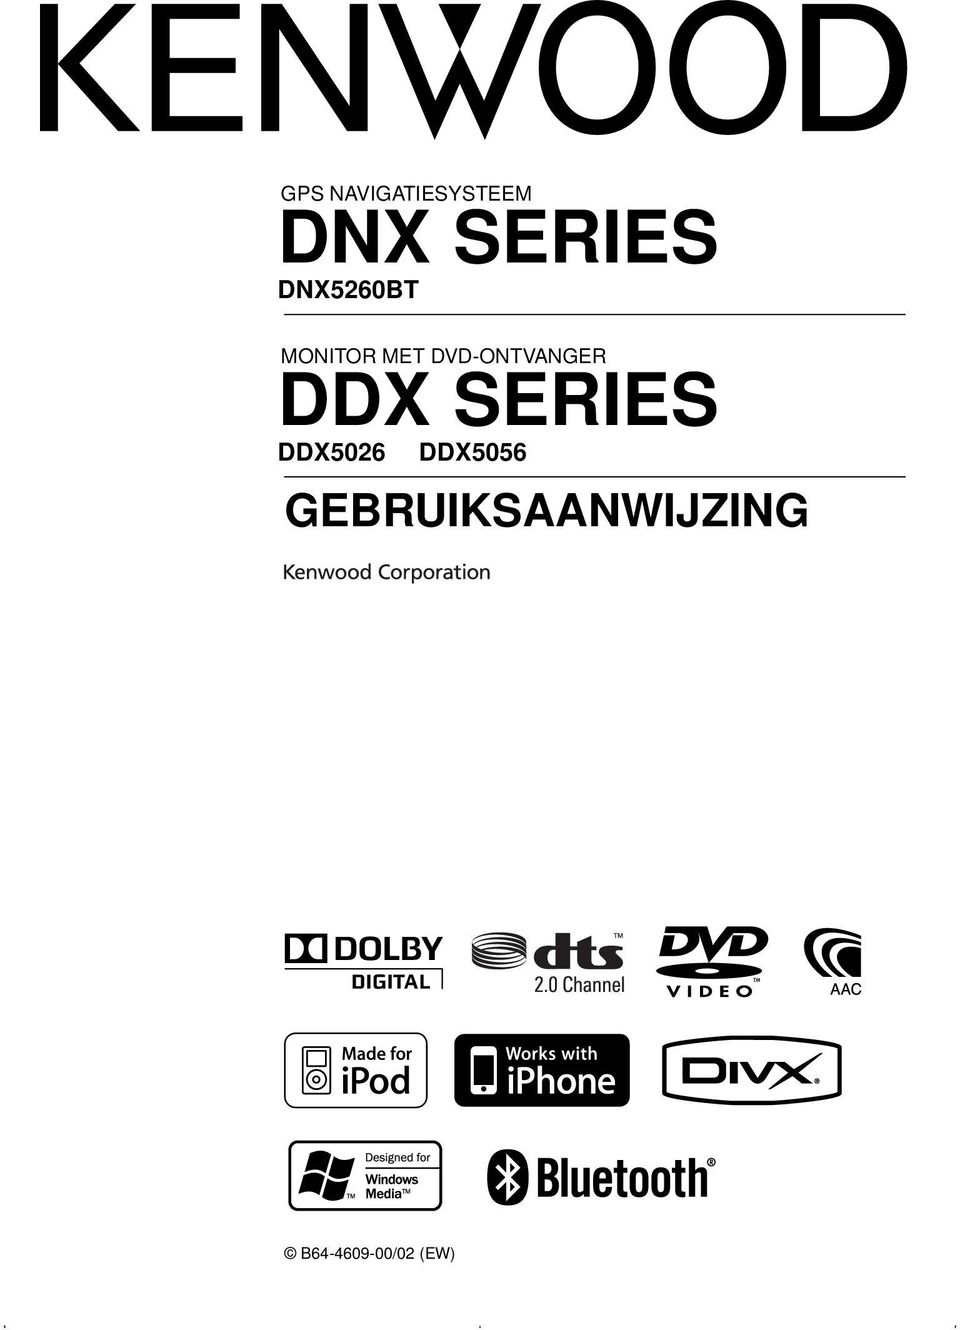 DVD-ONTVANGER DDX SERIES DDX506